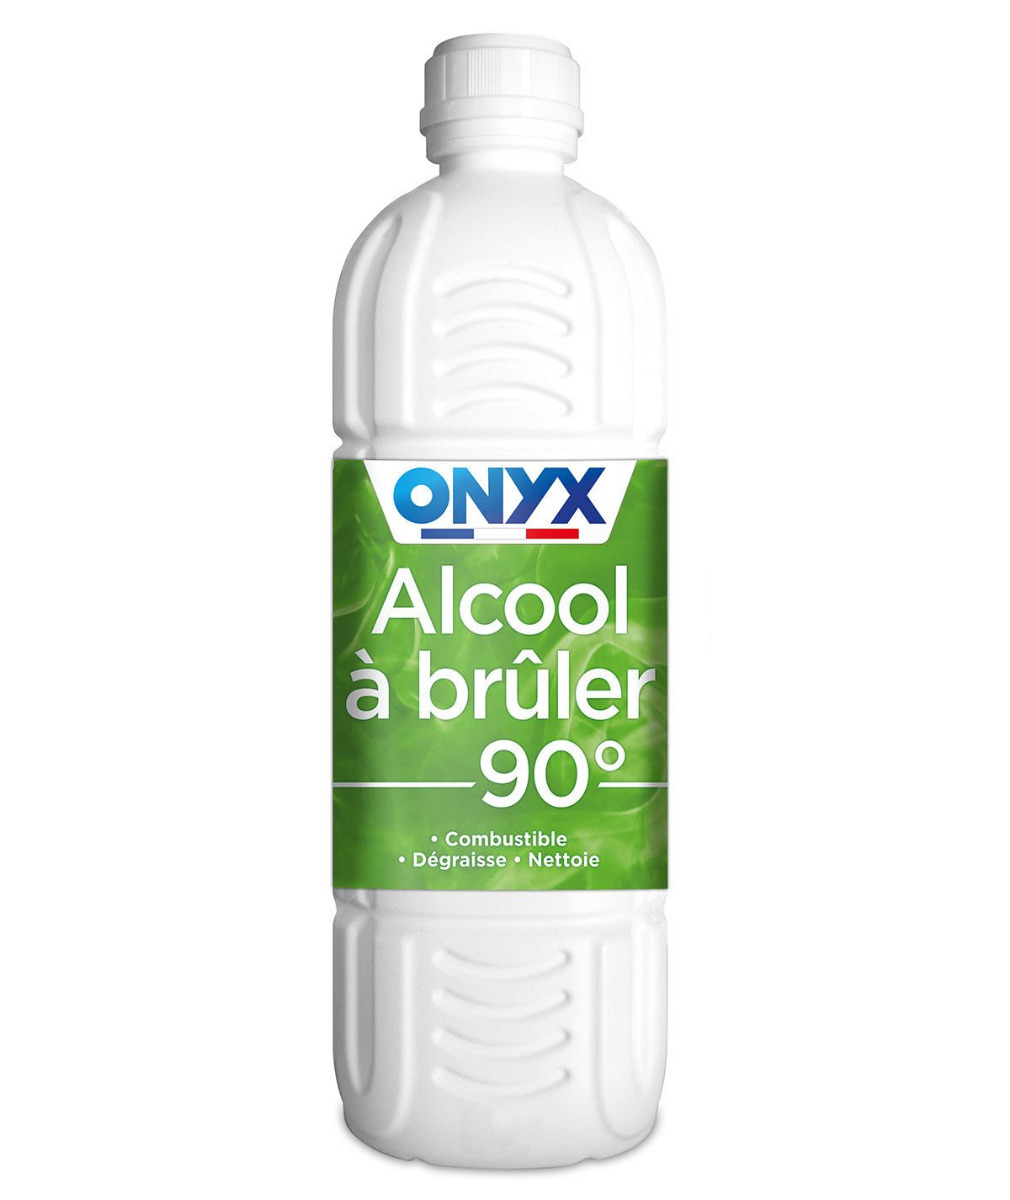 Alcool a bruler 90Â° - Onyx - 1 Litre